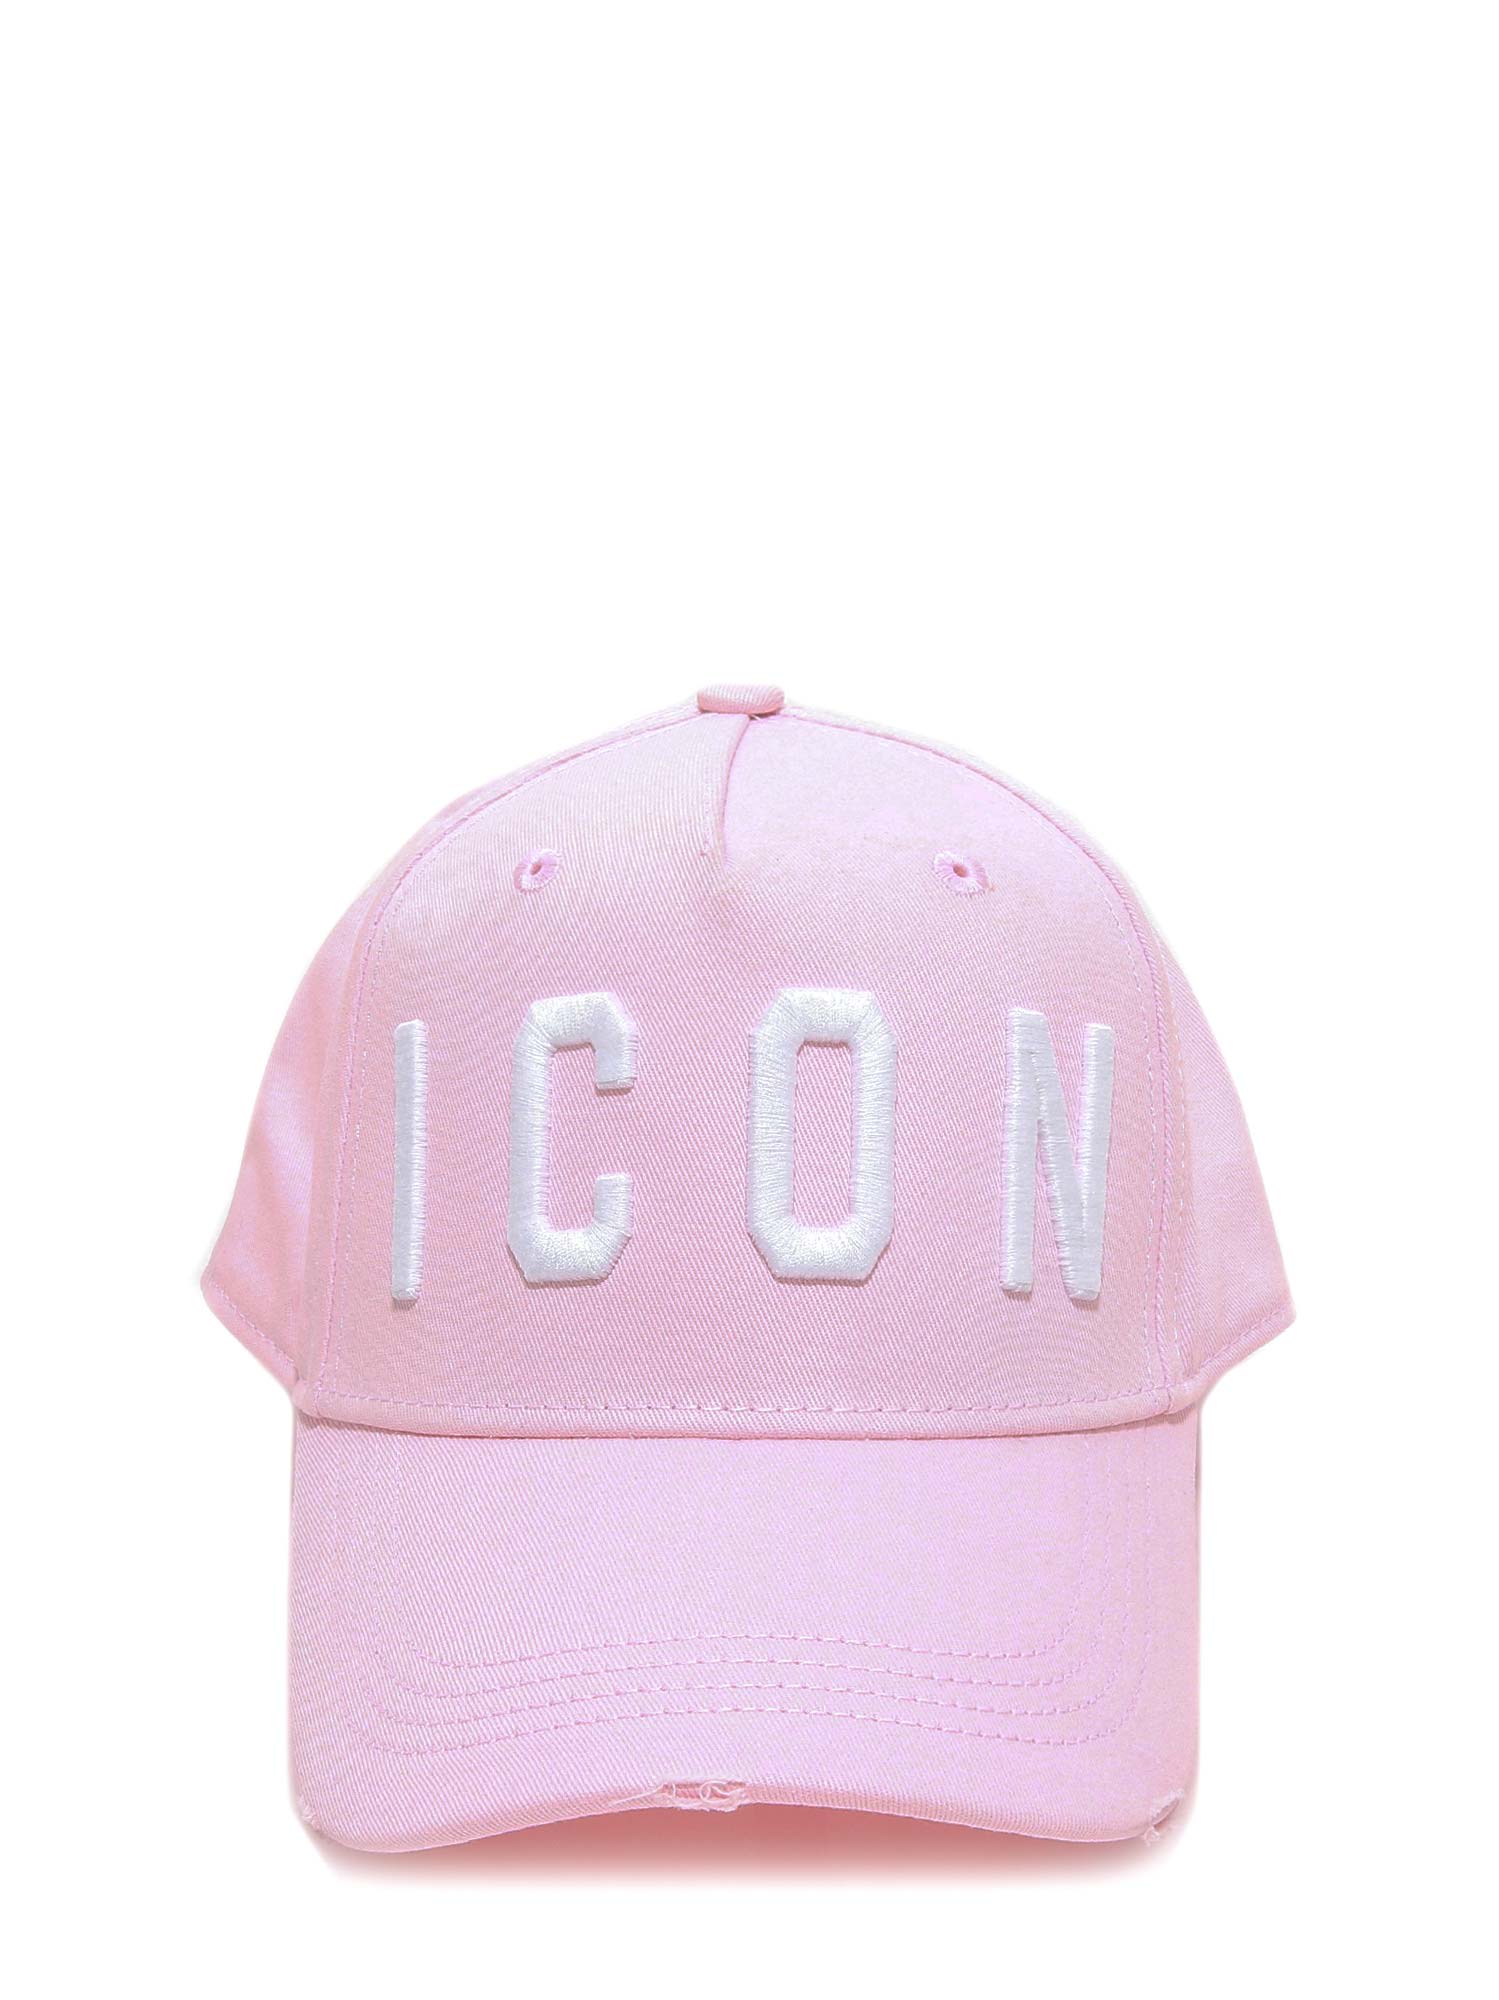 dsquared cap pink